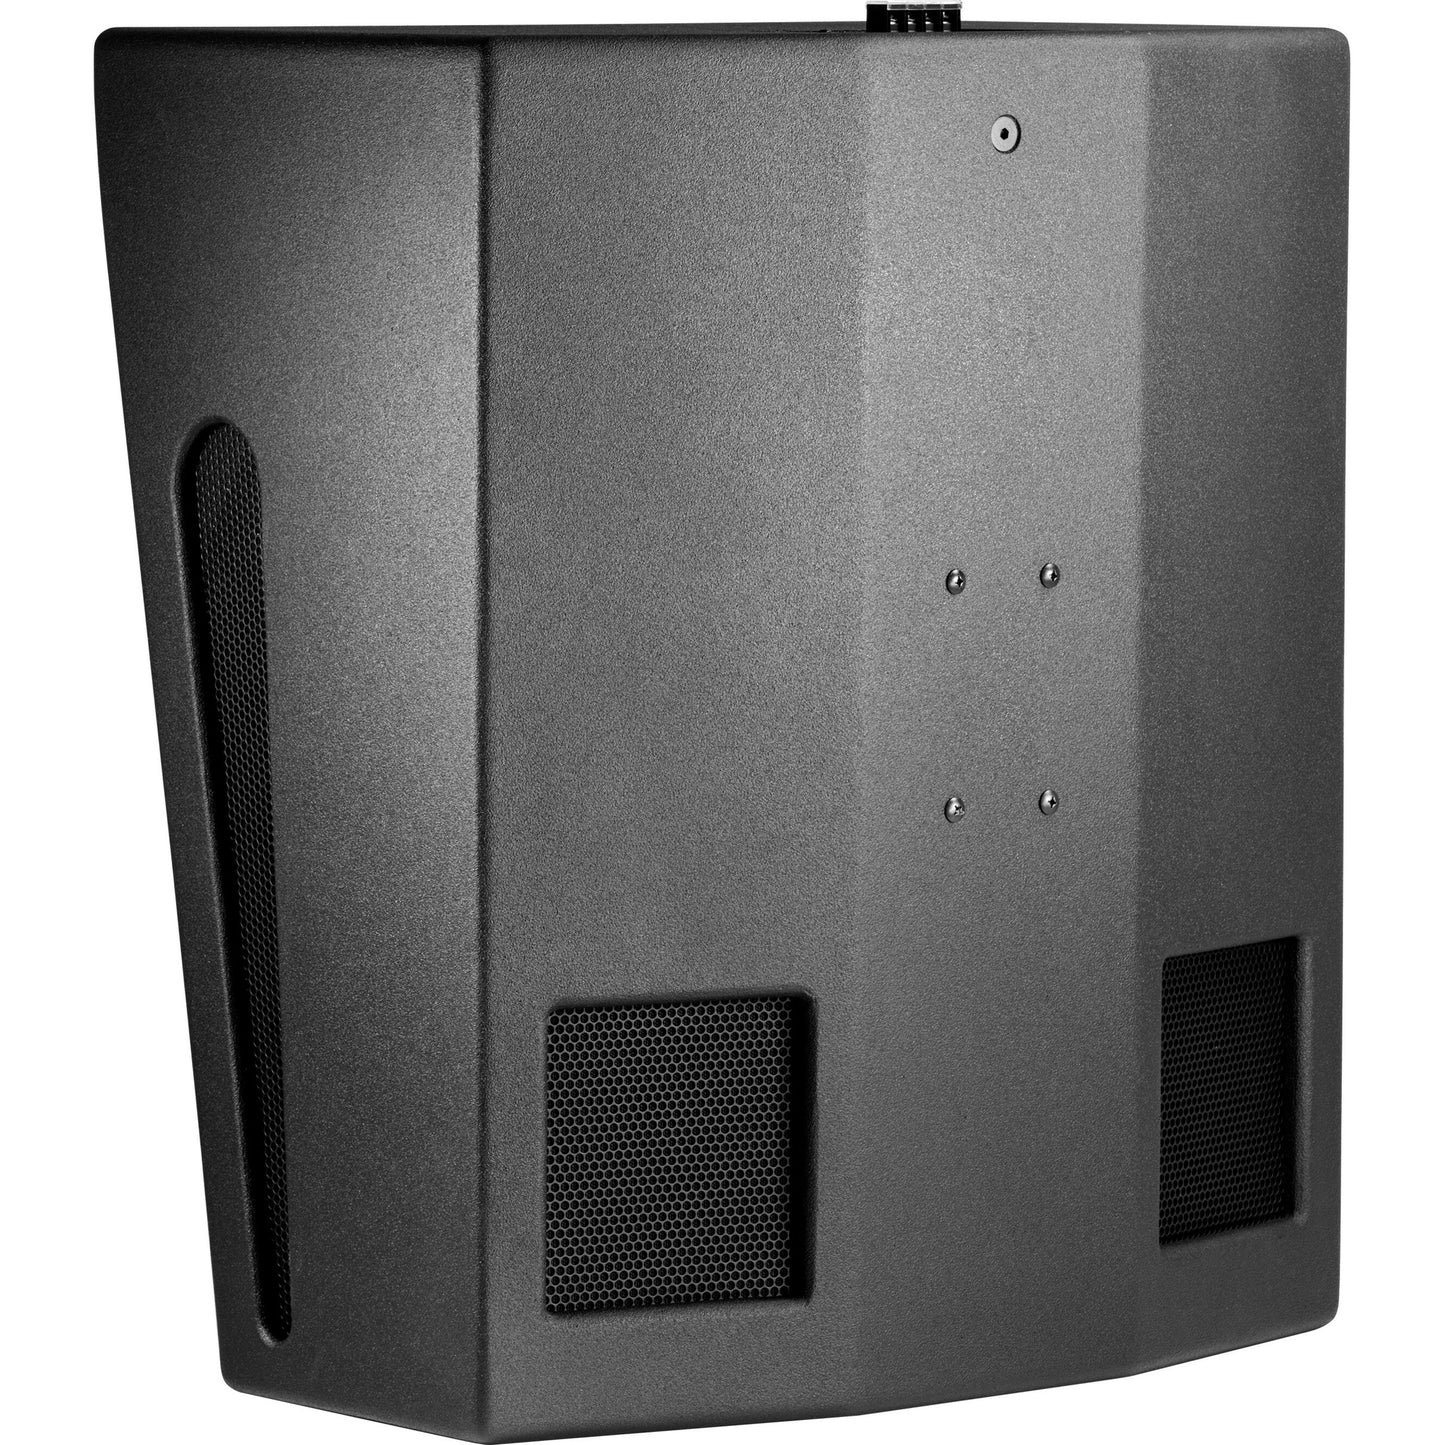 JBL Professional 9350 3-way Wall Mountable Speaker - Black